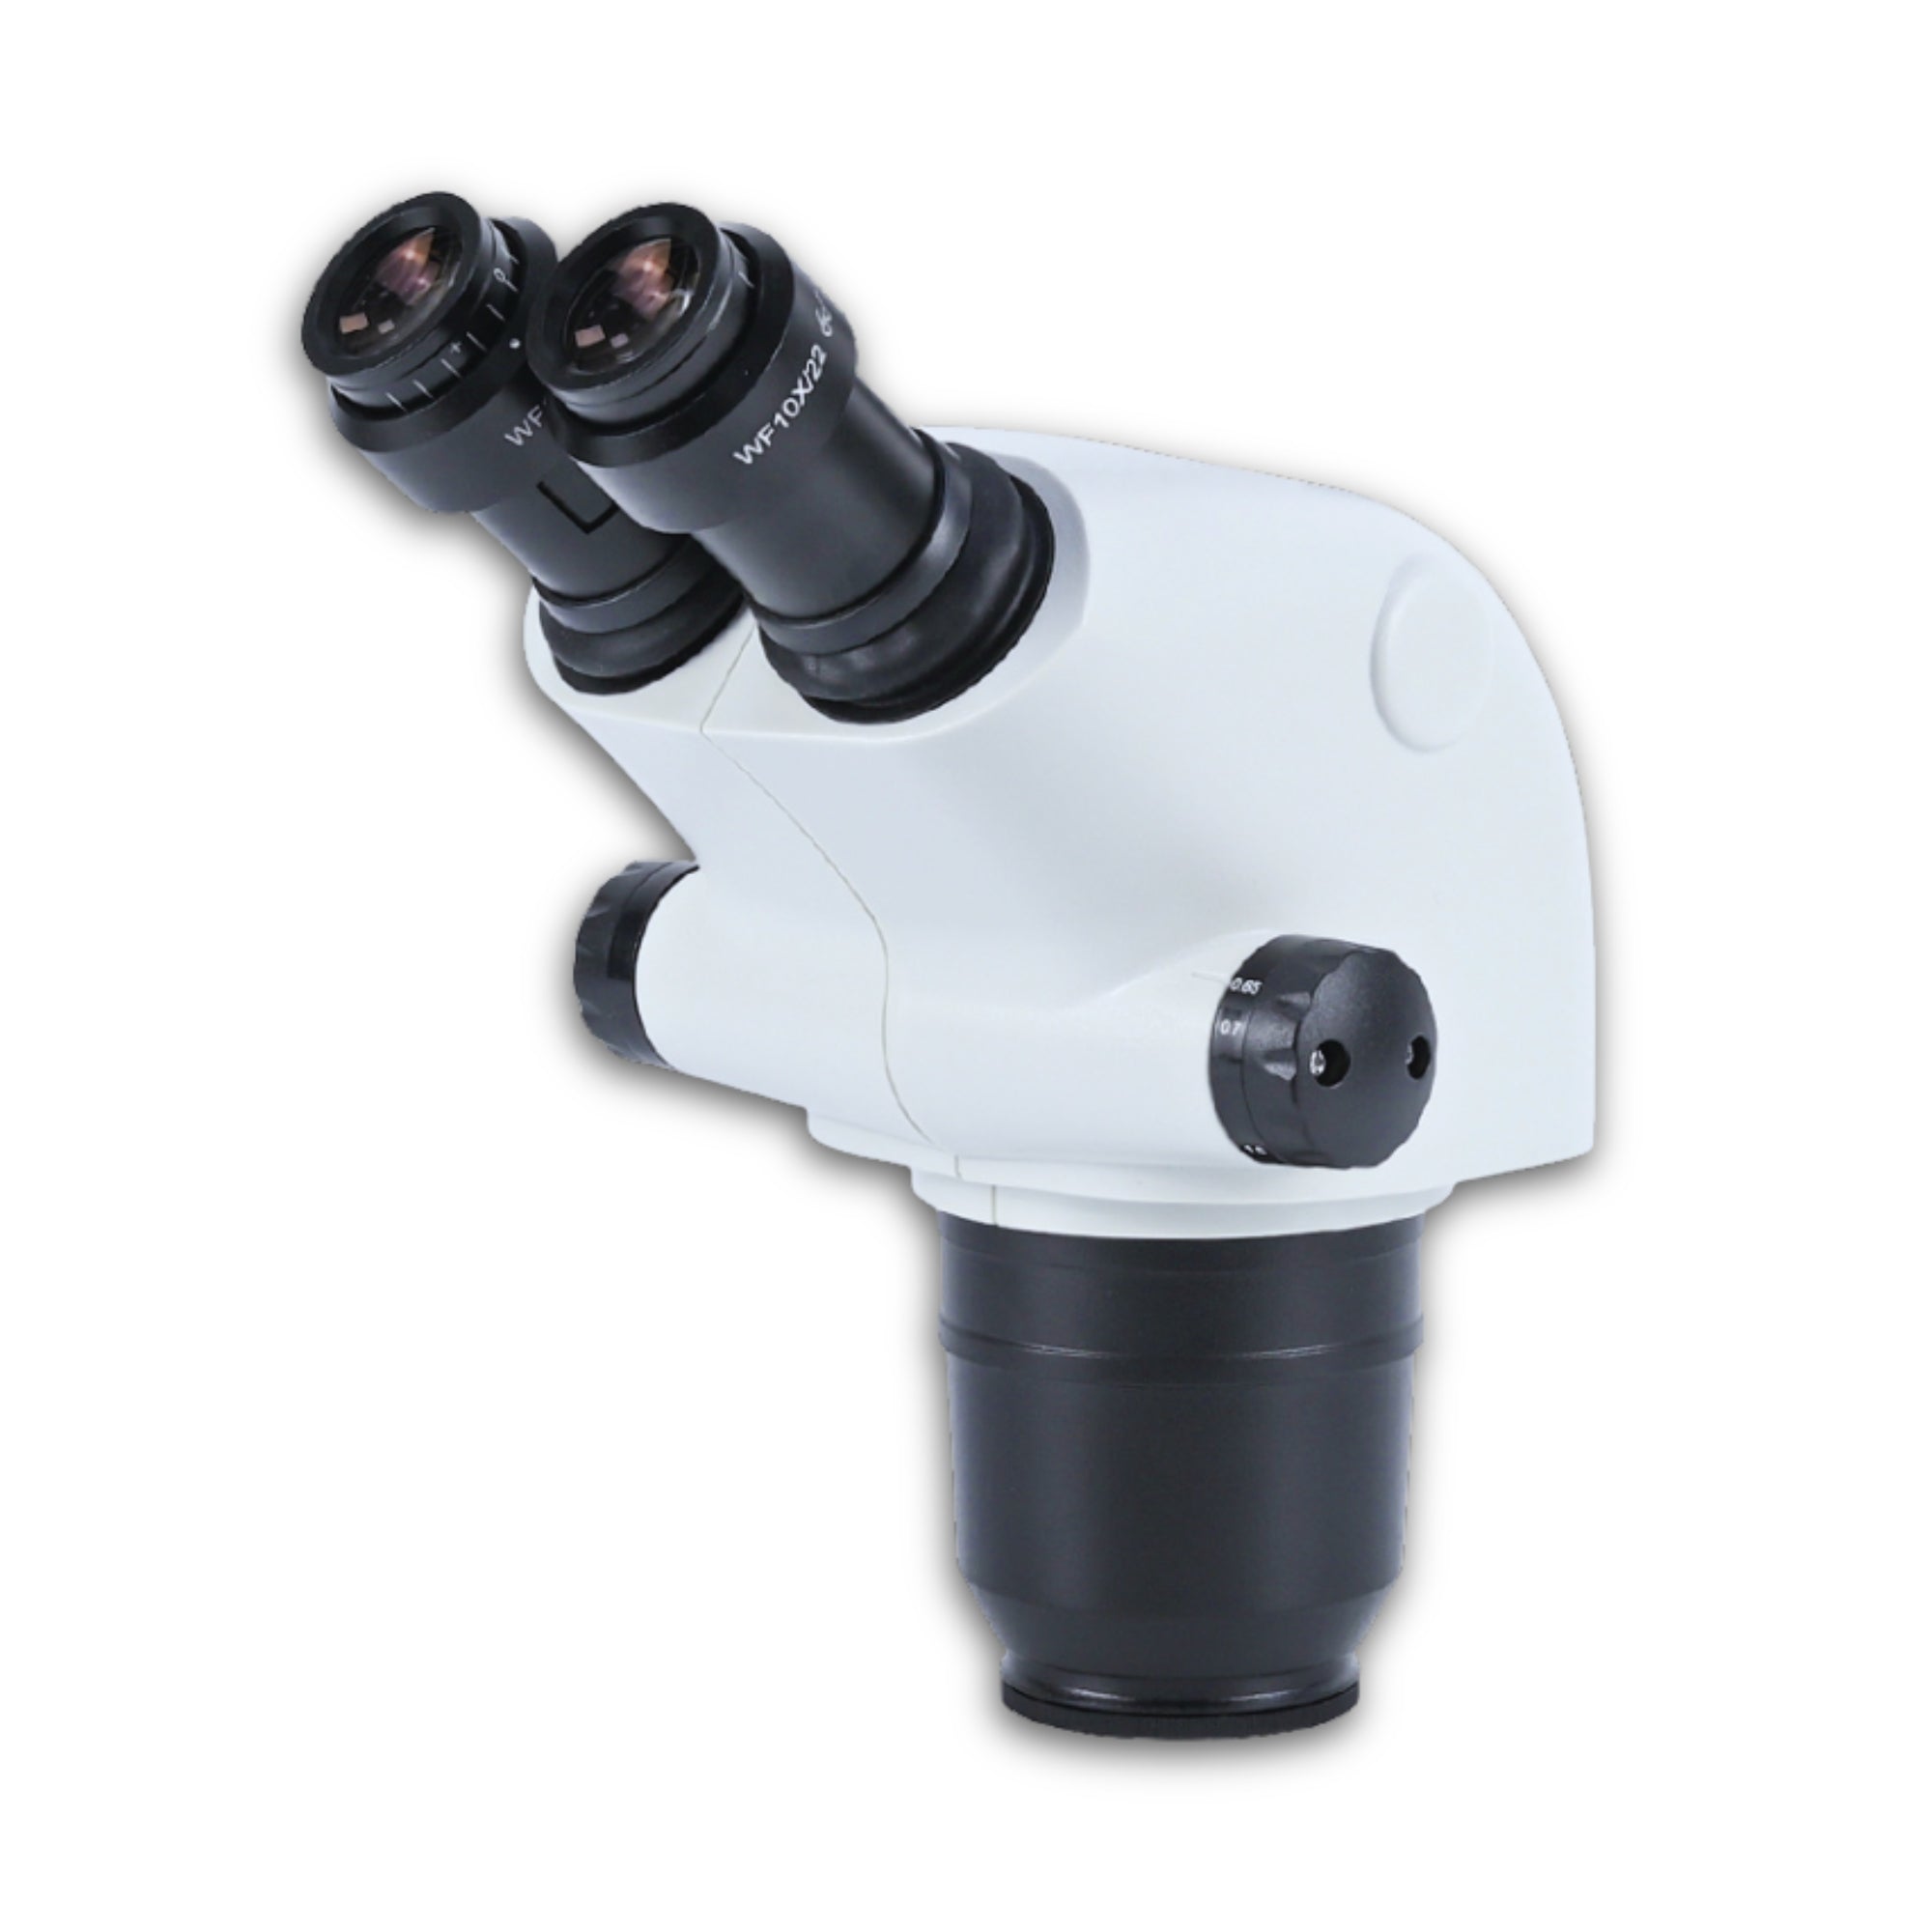 Cabezal de microscopio con zoom estéreo binocular 0,65-6,5X